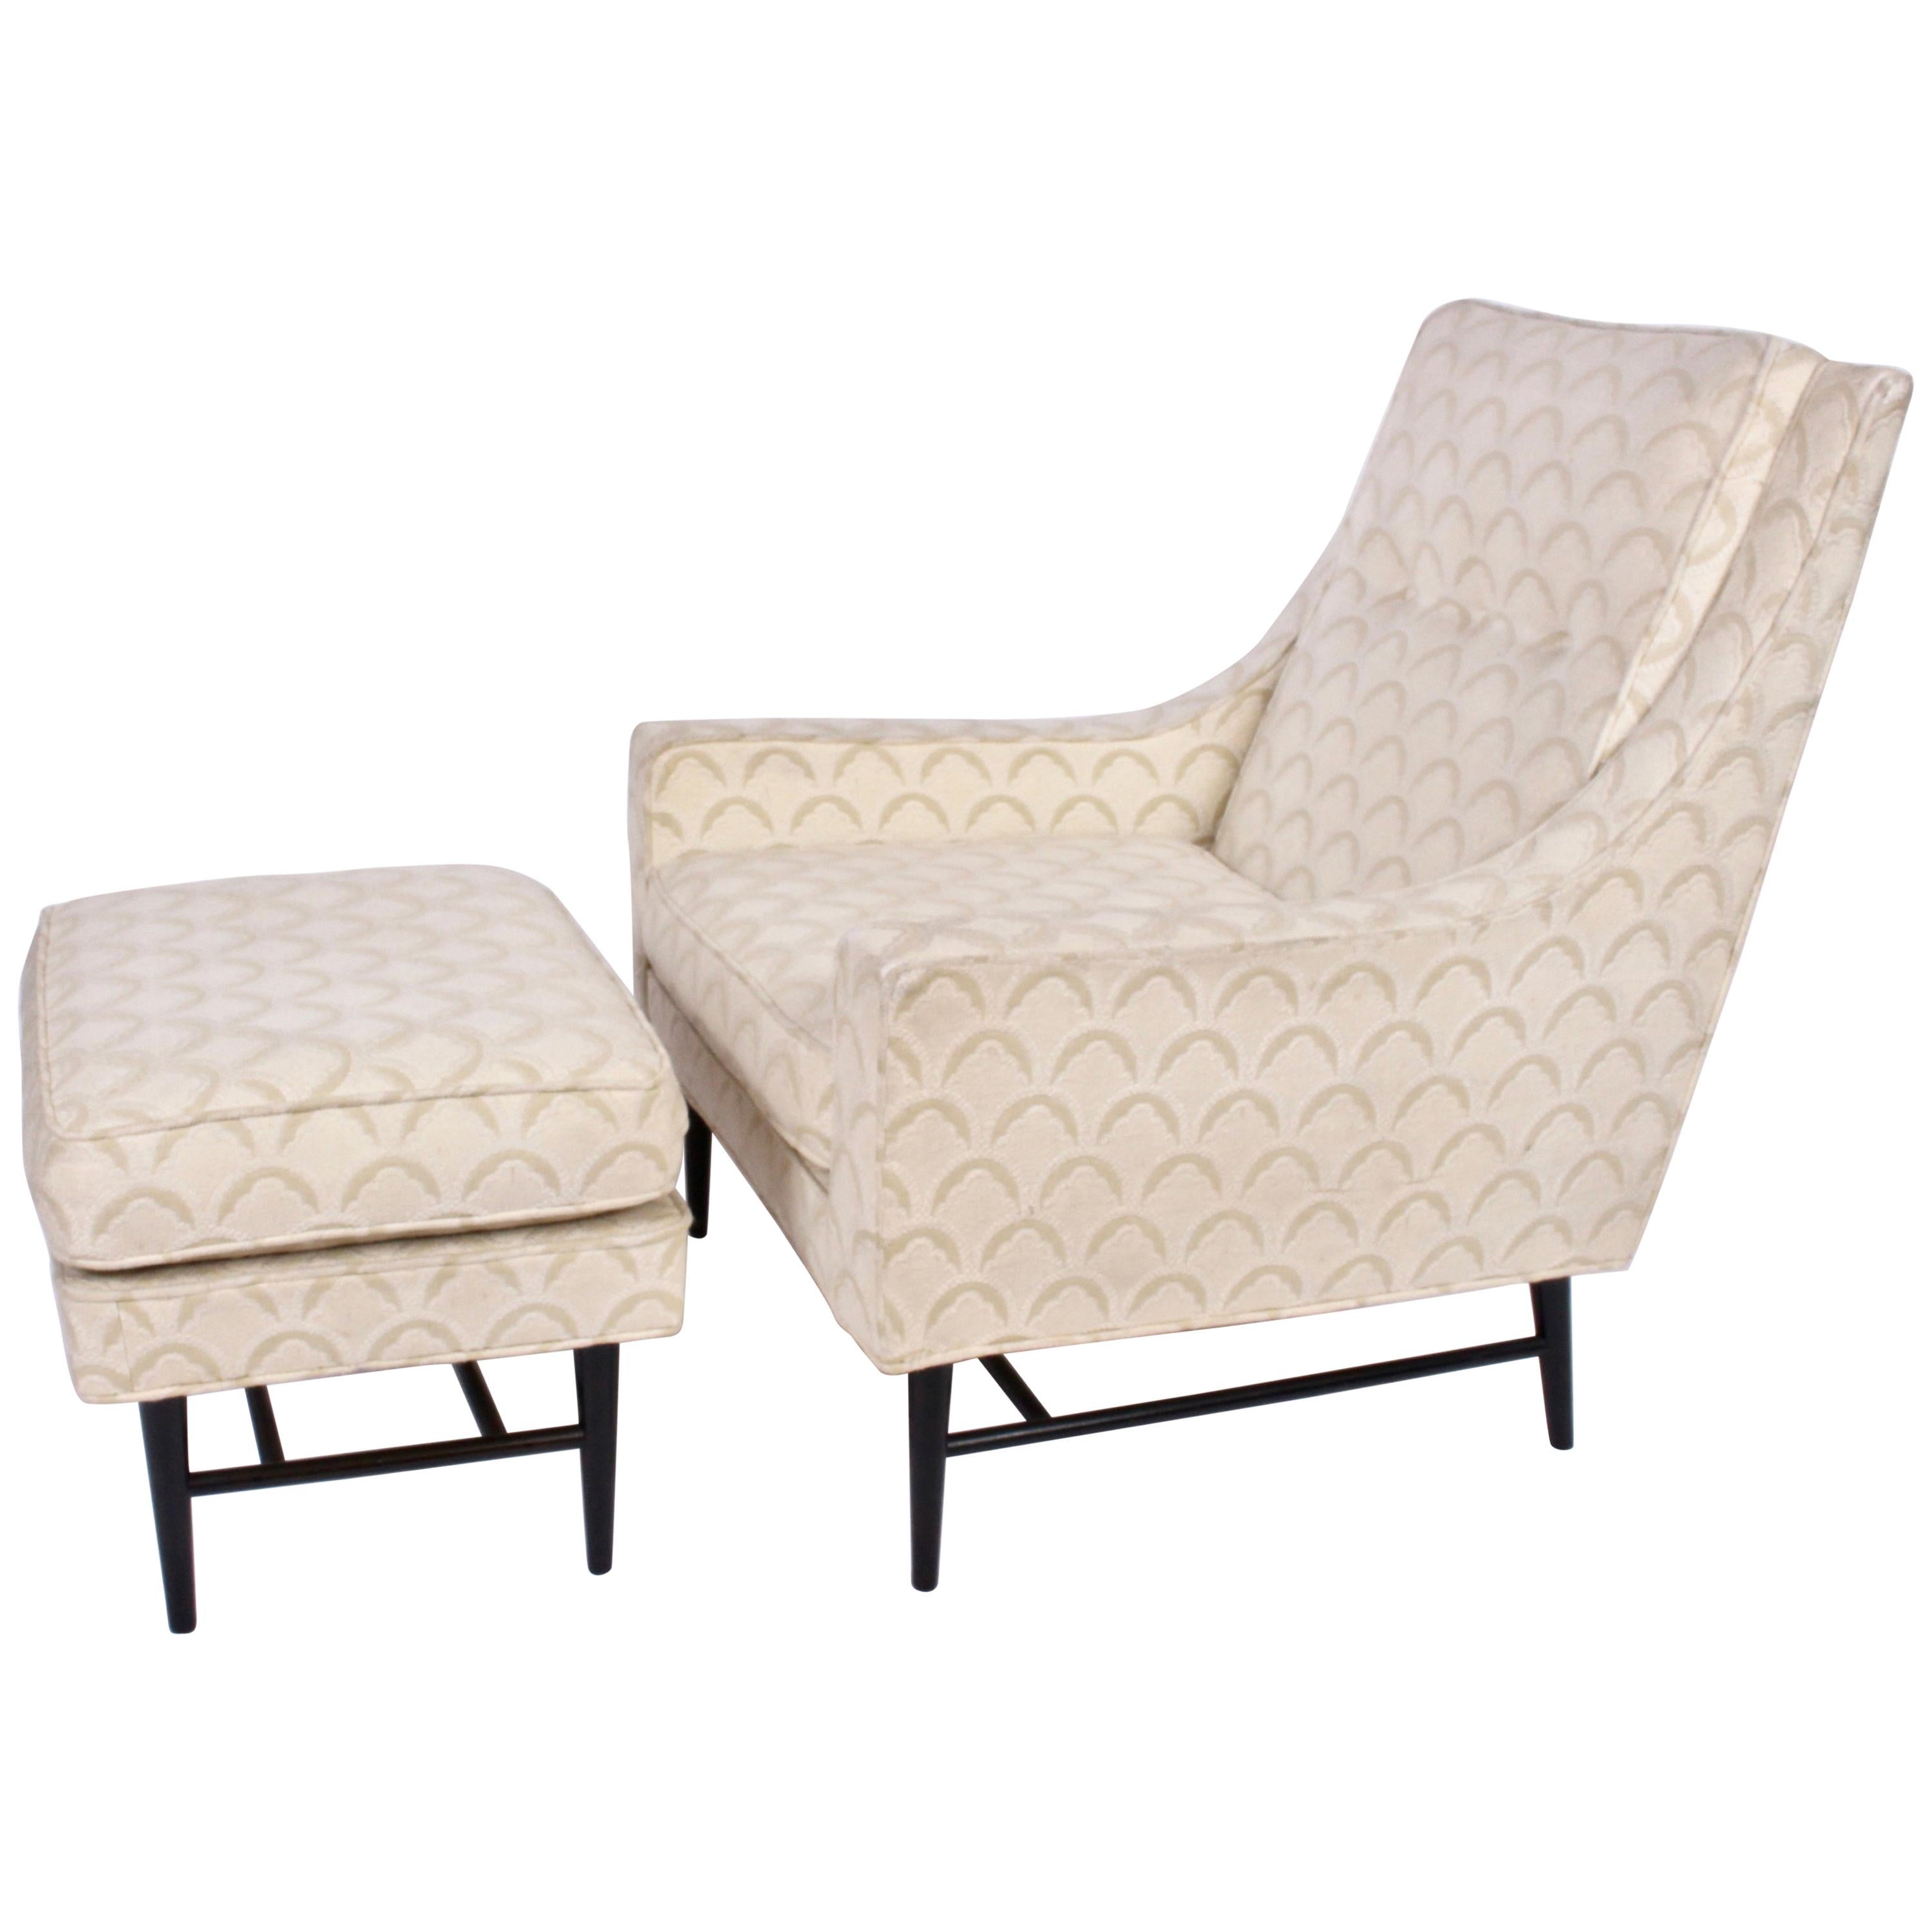 Paul McCobb Lounge Chair and Ottoman, 1960s